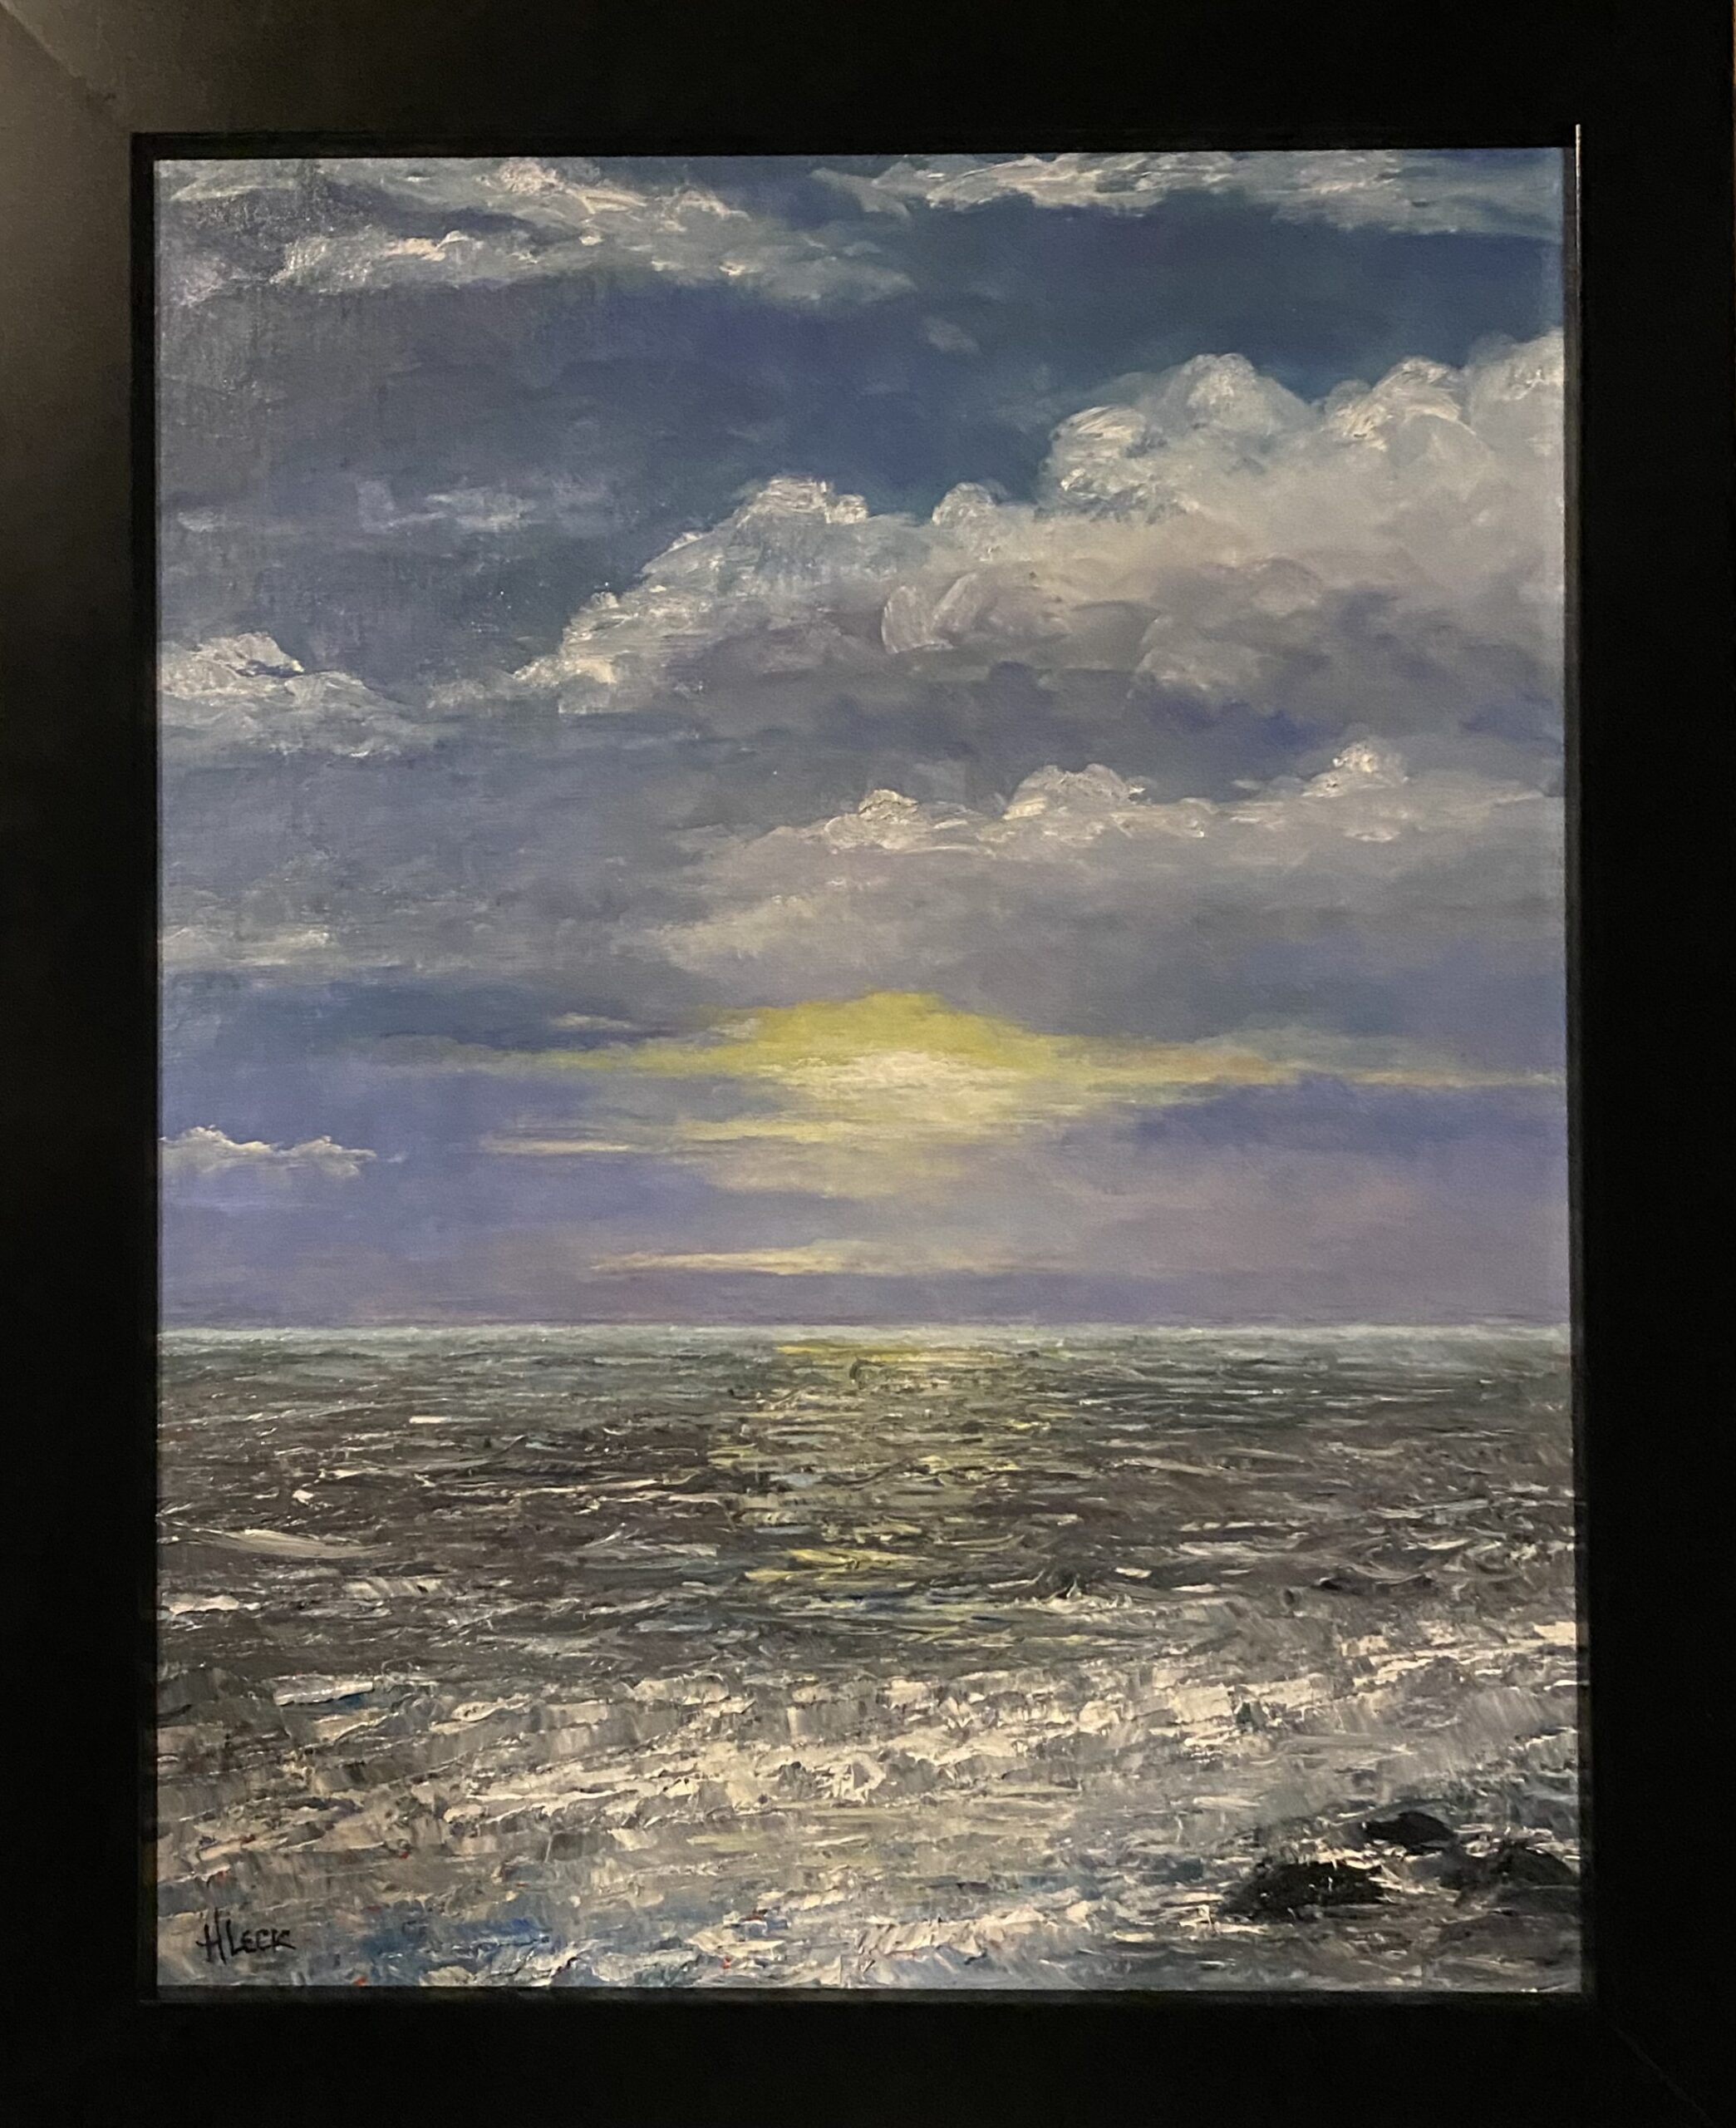 248 - Ocean Sunrise - 14x18 - Landscape - $425